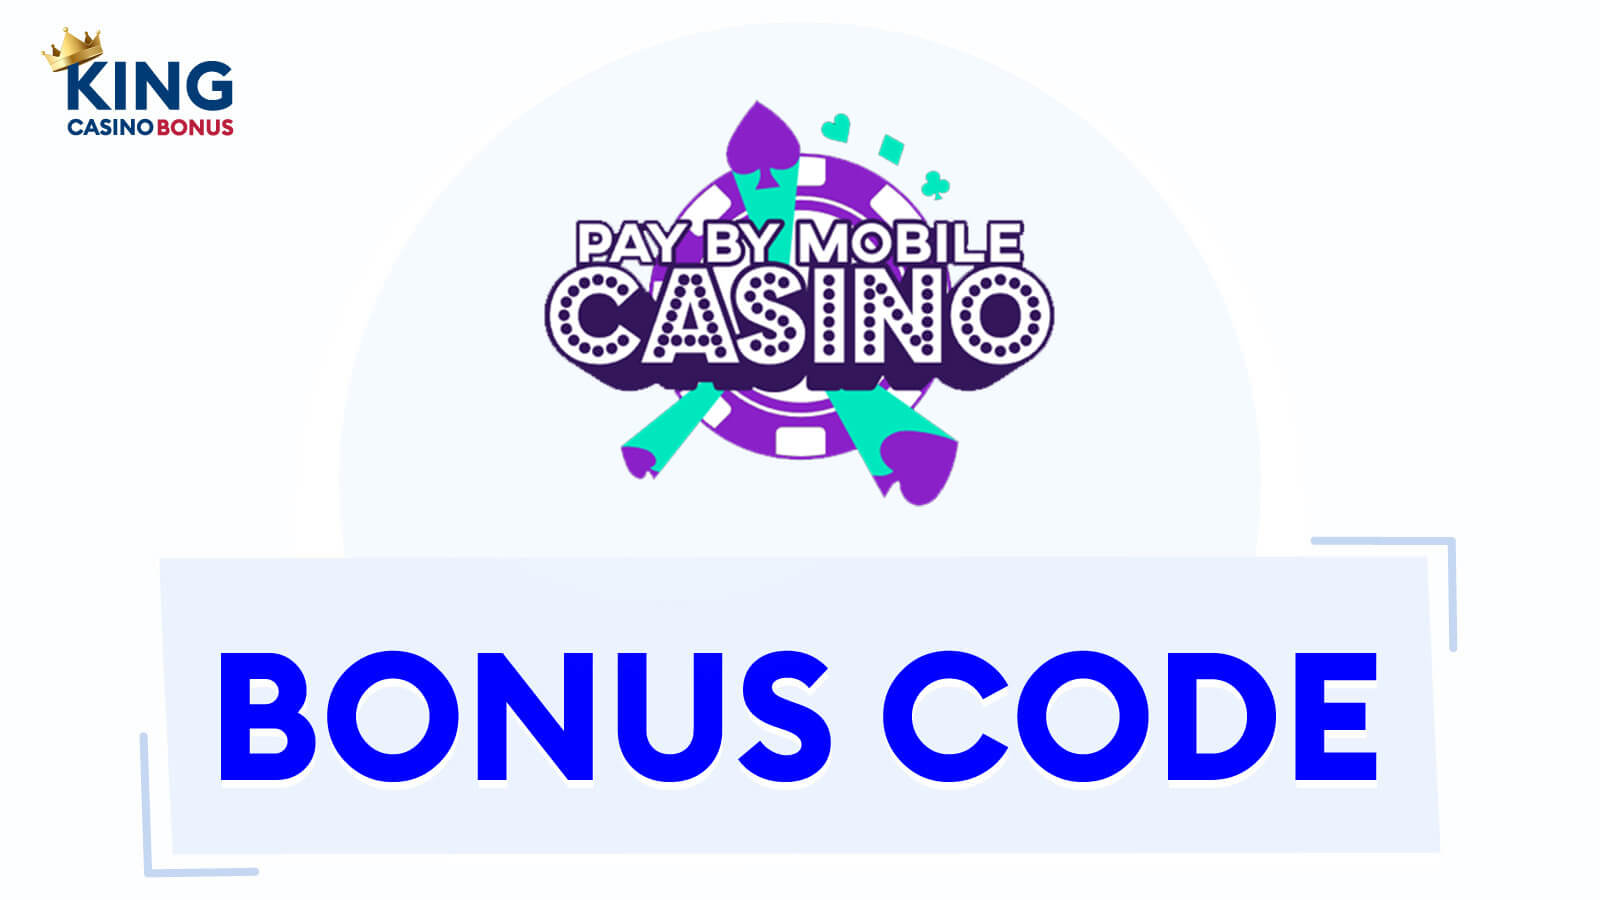 Pay by Mobile Casino Bonus Codes